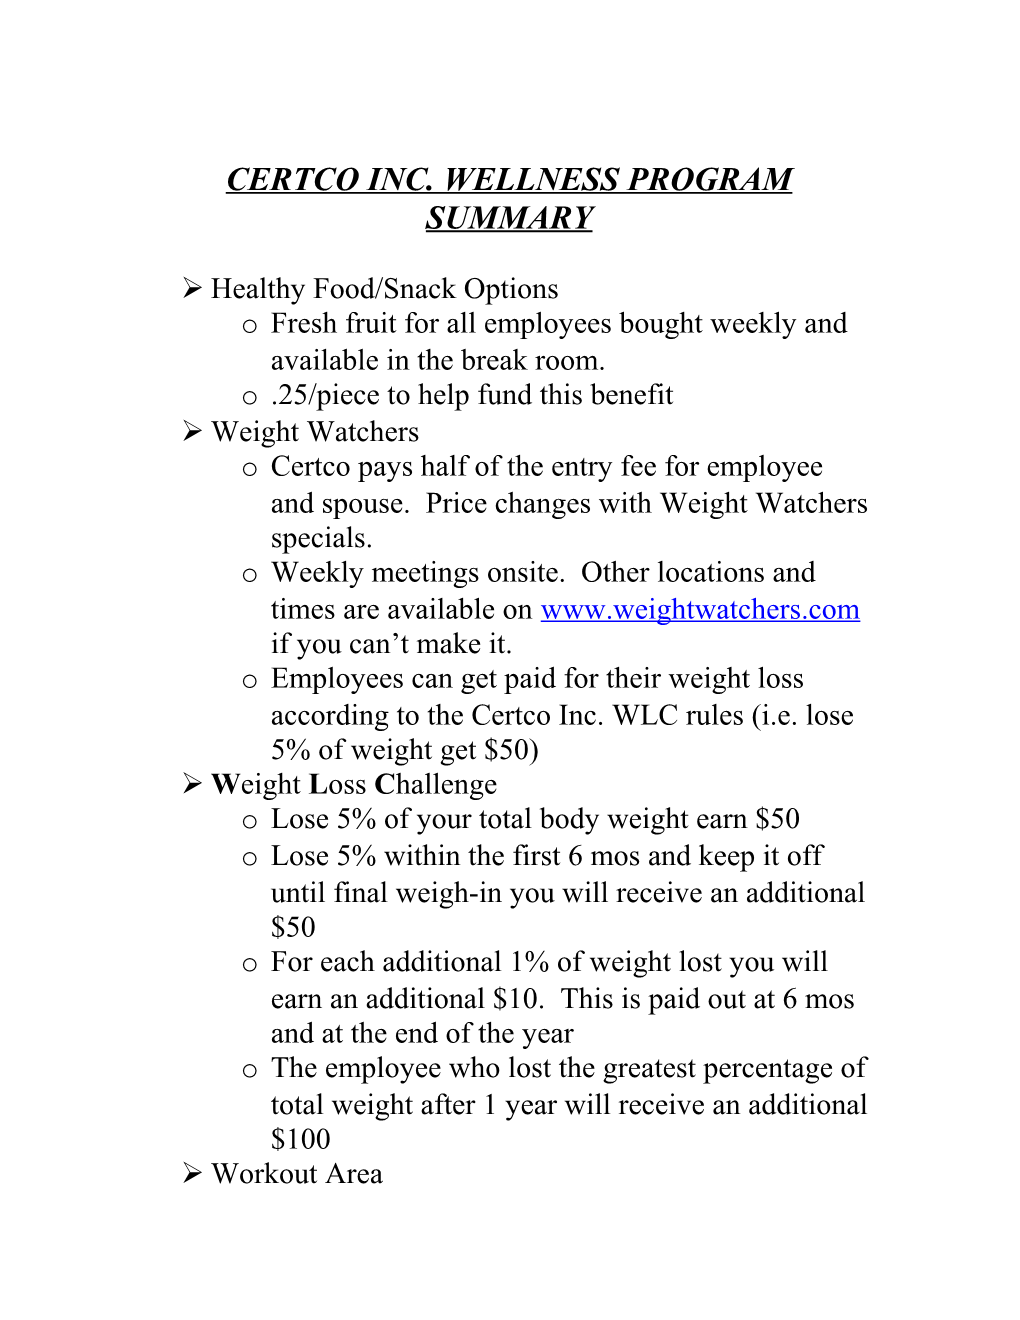 Certco Inc. Wellness Program Summary